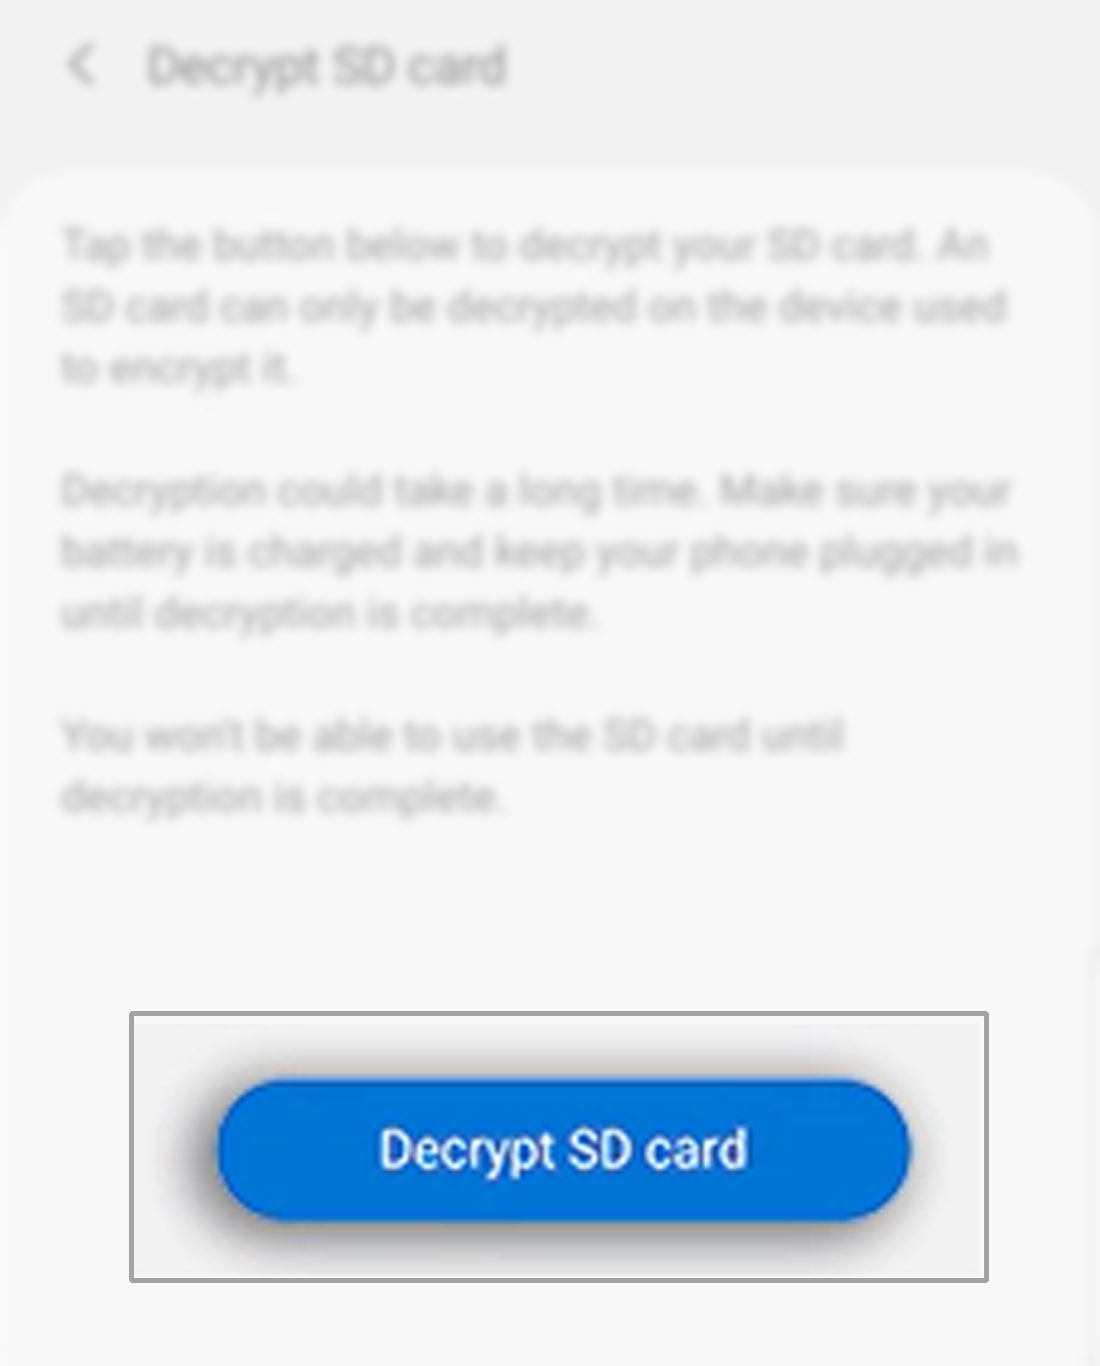 encrypt-decrypt sd card on galaxy s20 - confirm decrypt